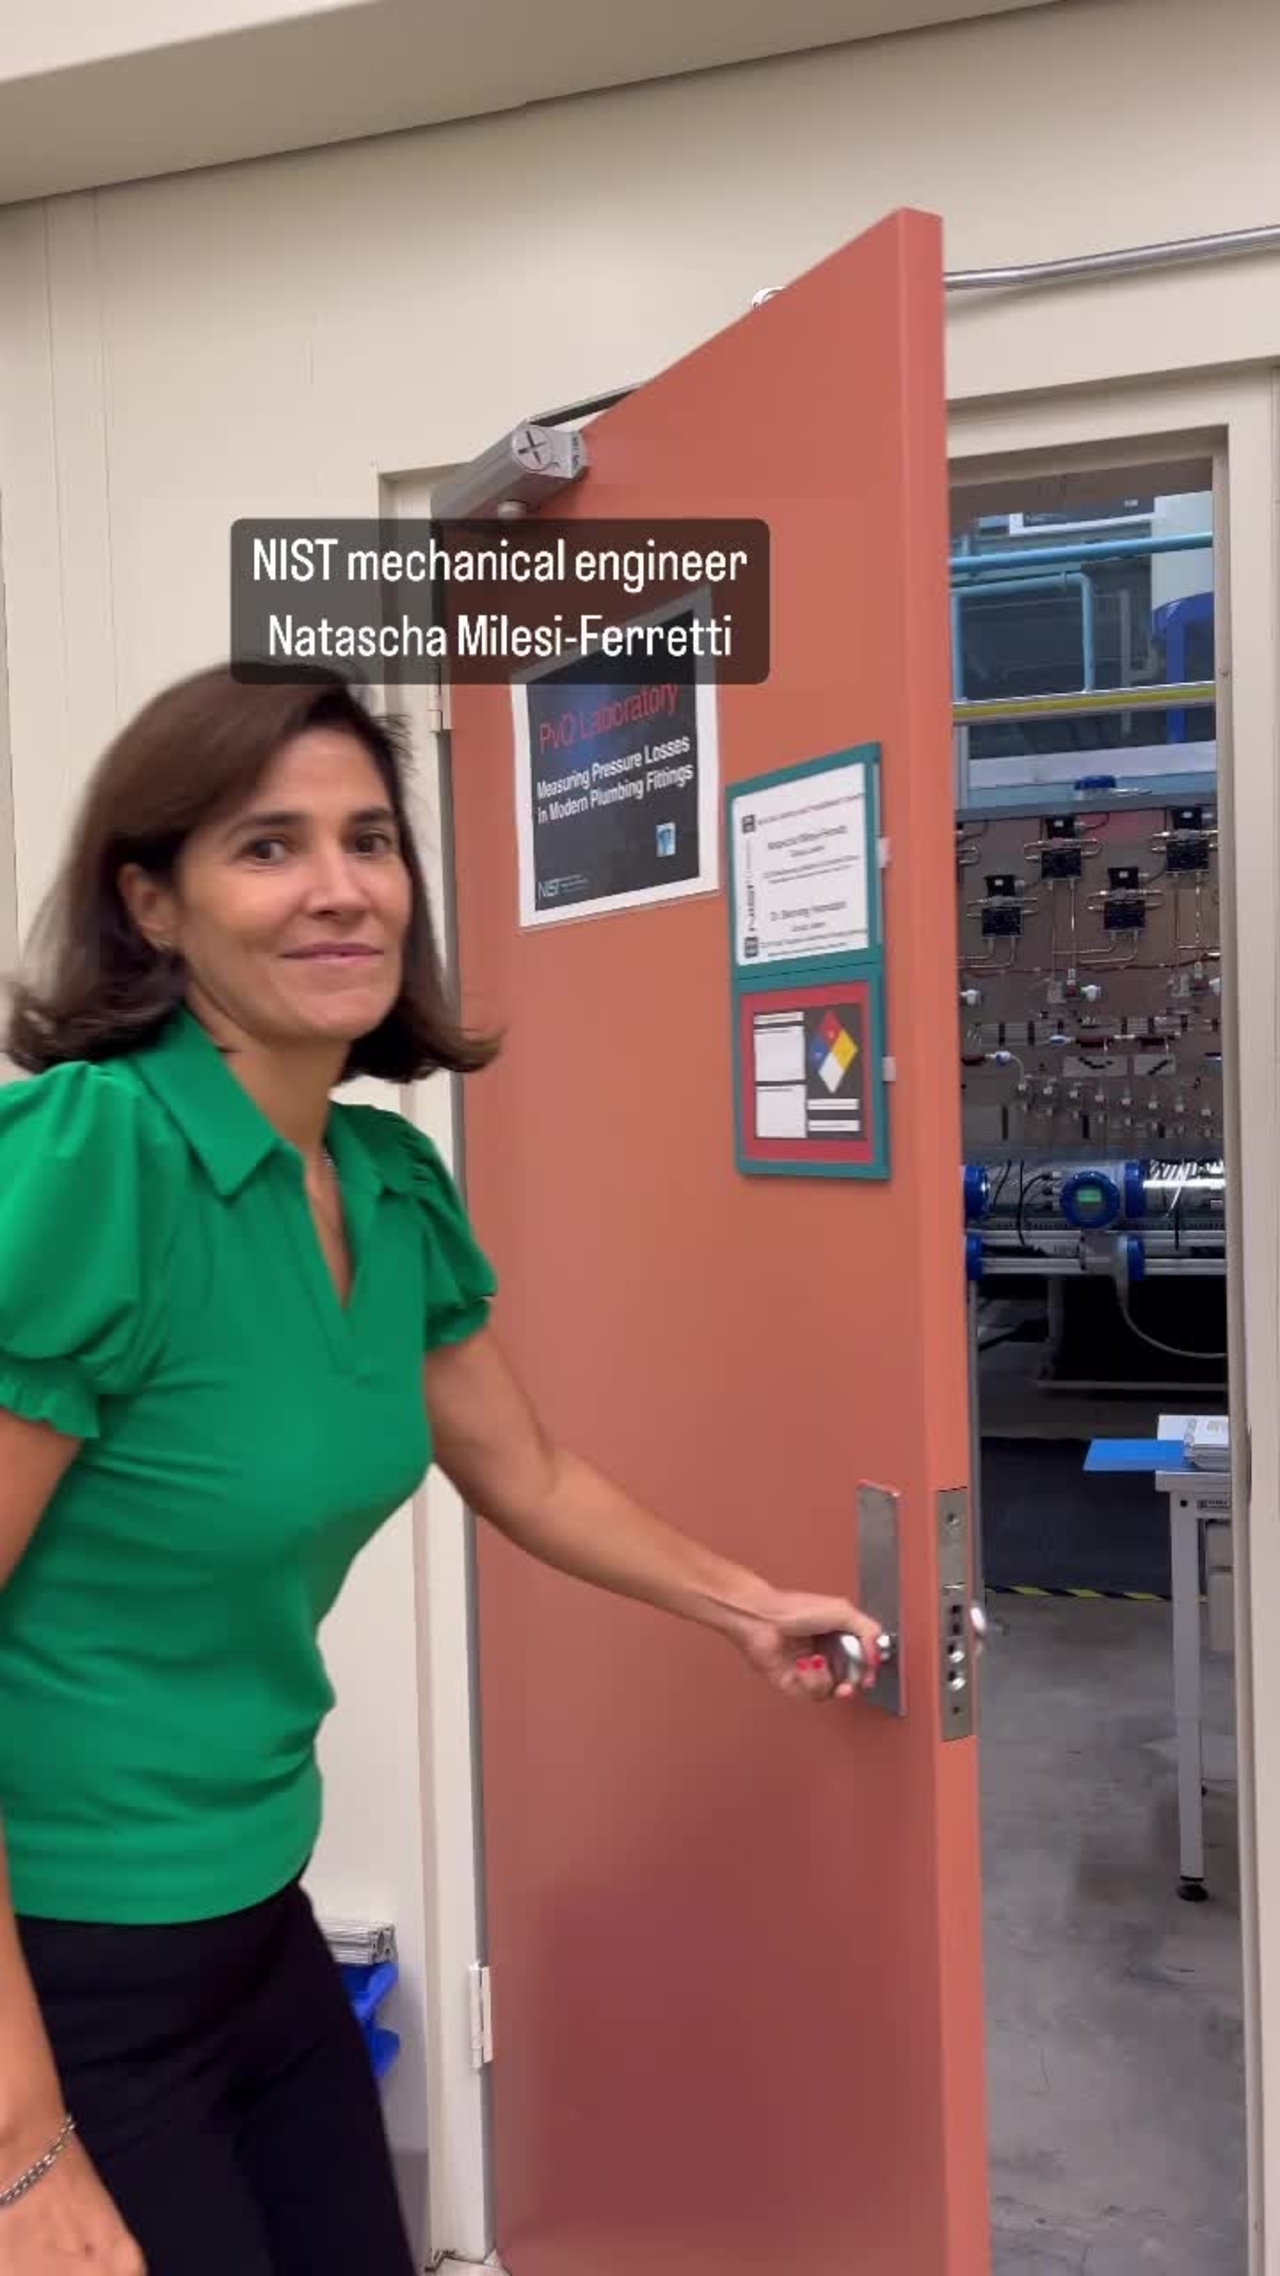 Inside NIST's Plumbing Hydraulics Laboratory